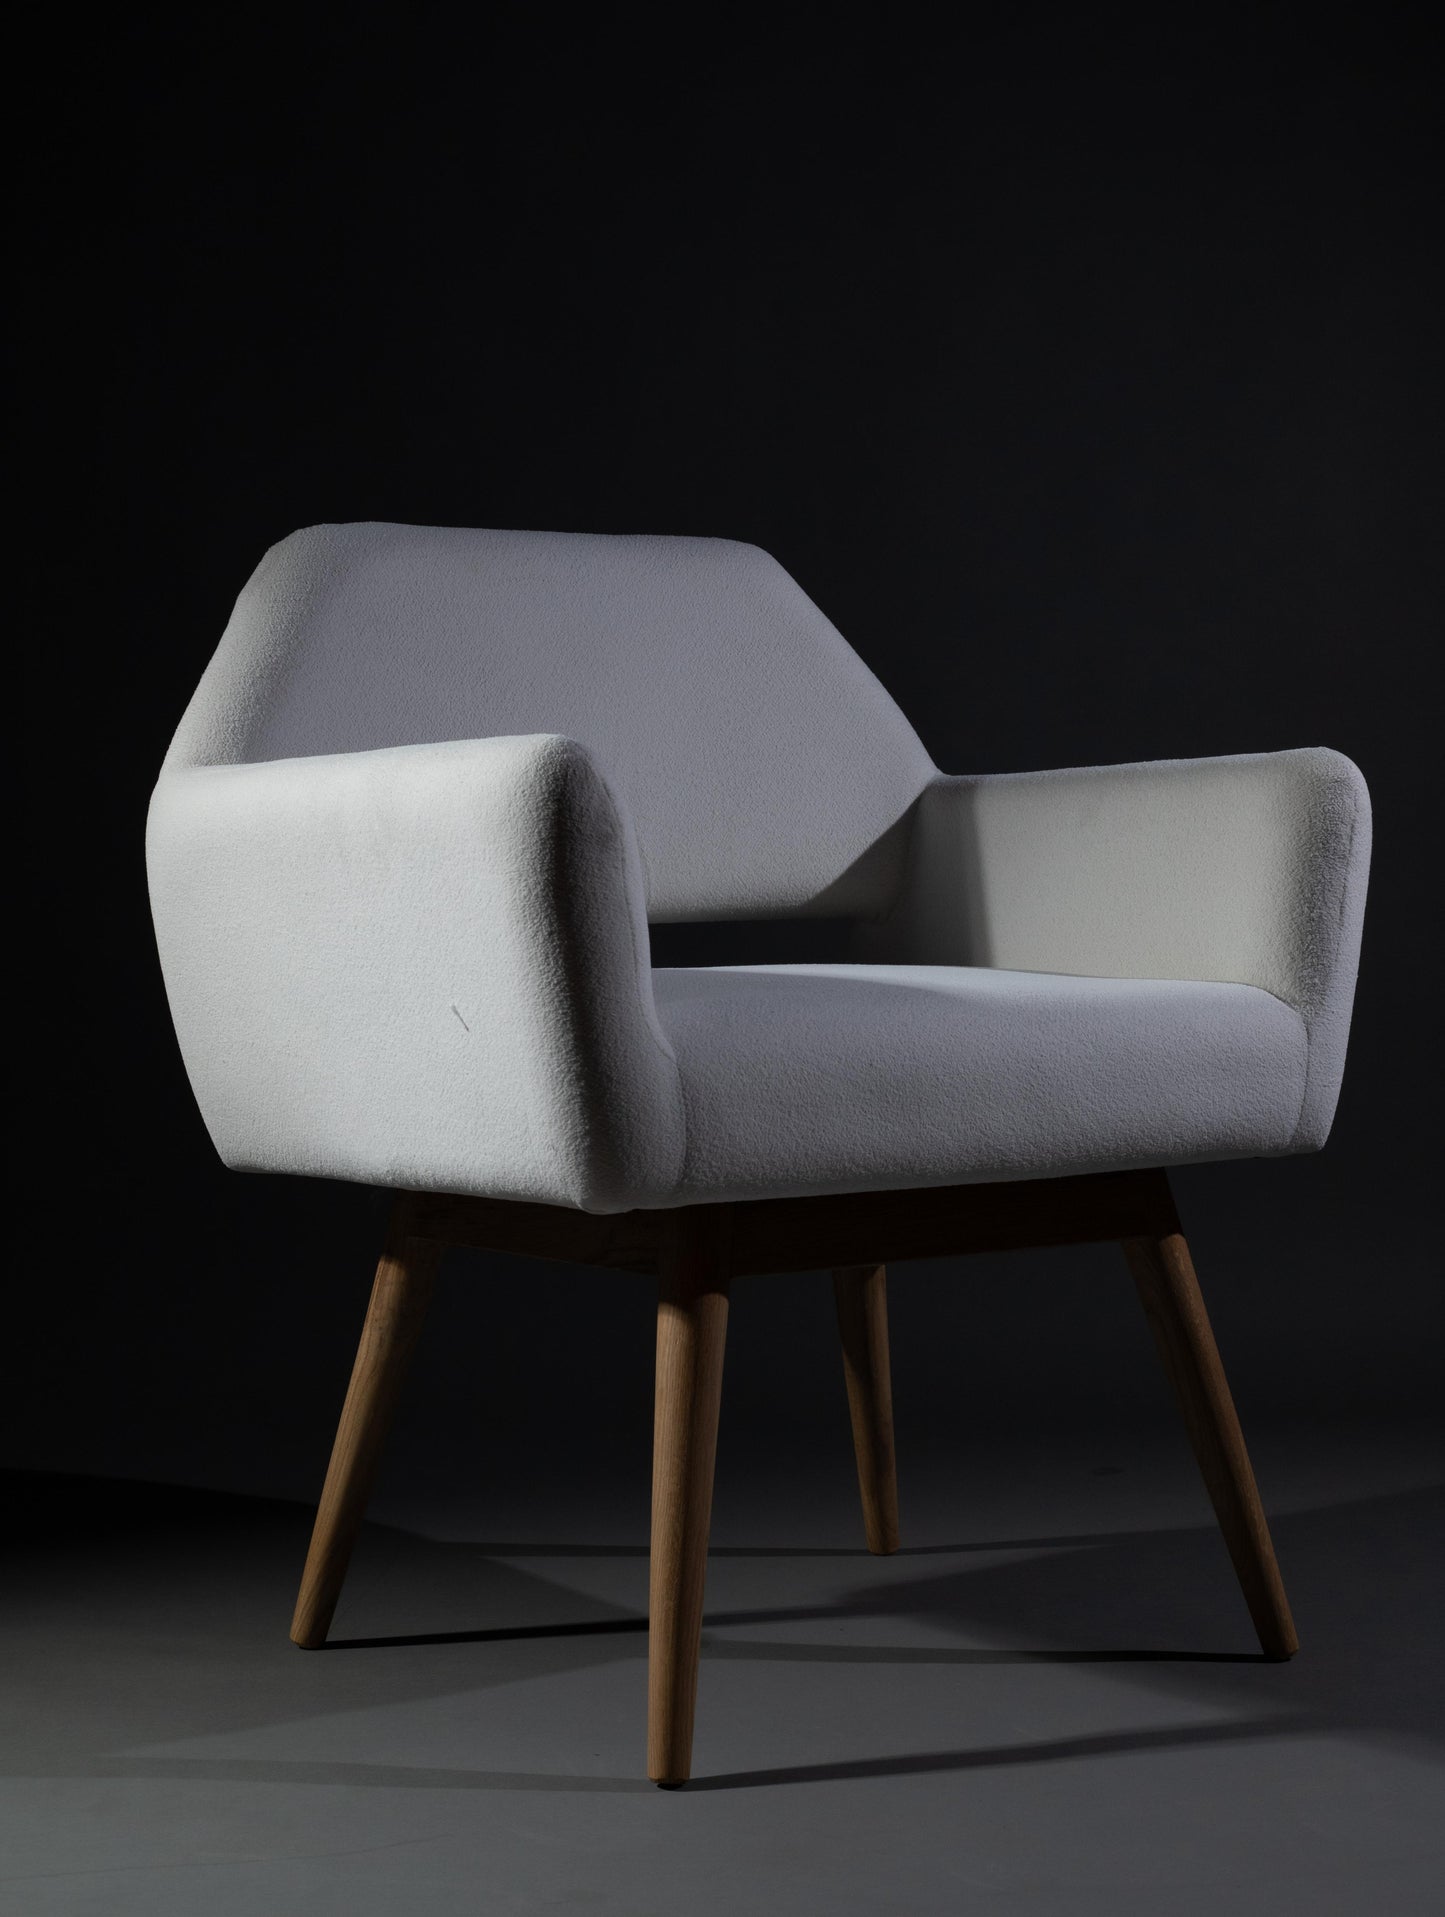 The Rahtain Sofa Chair